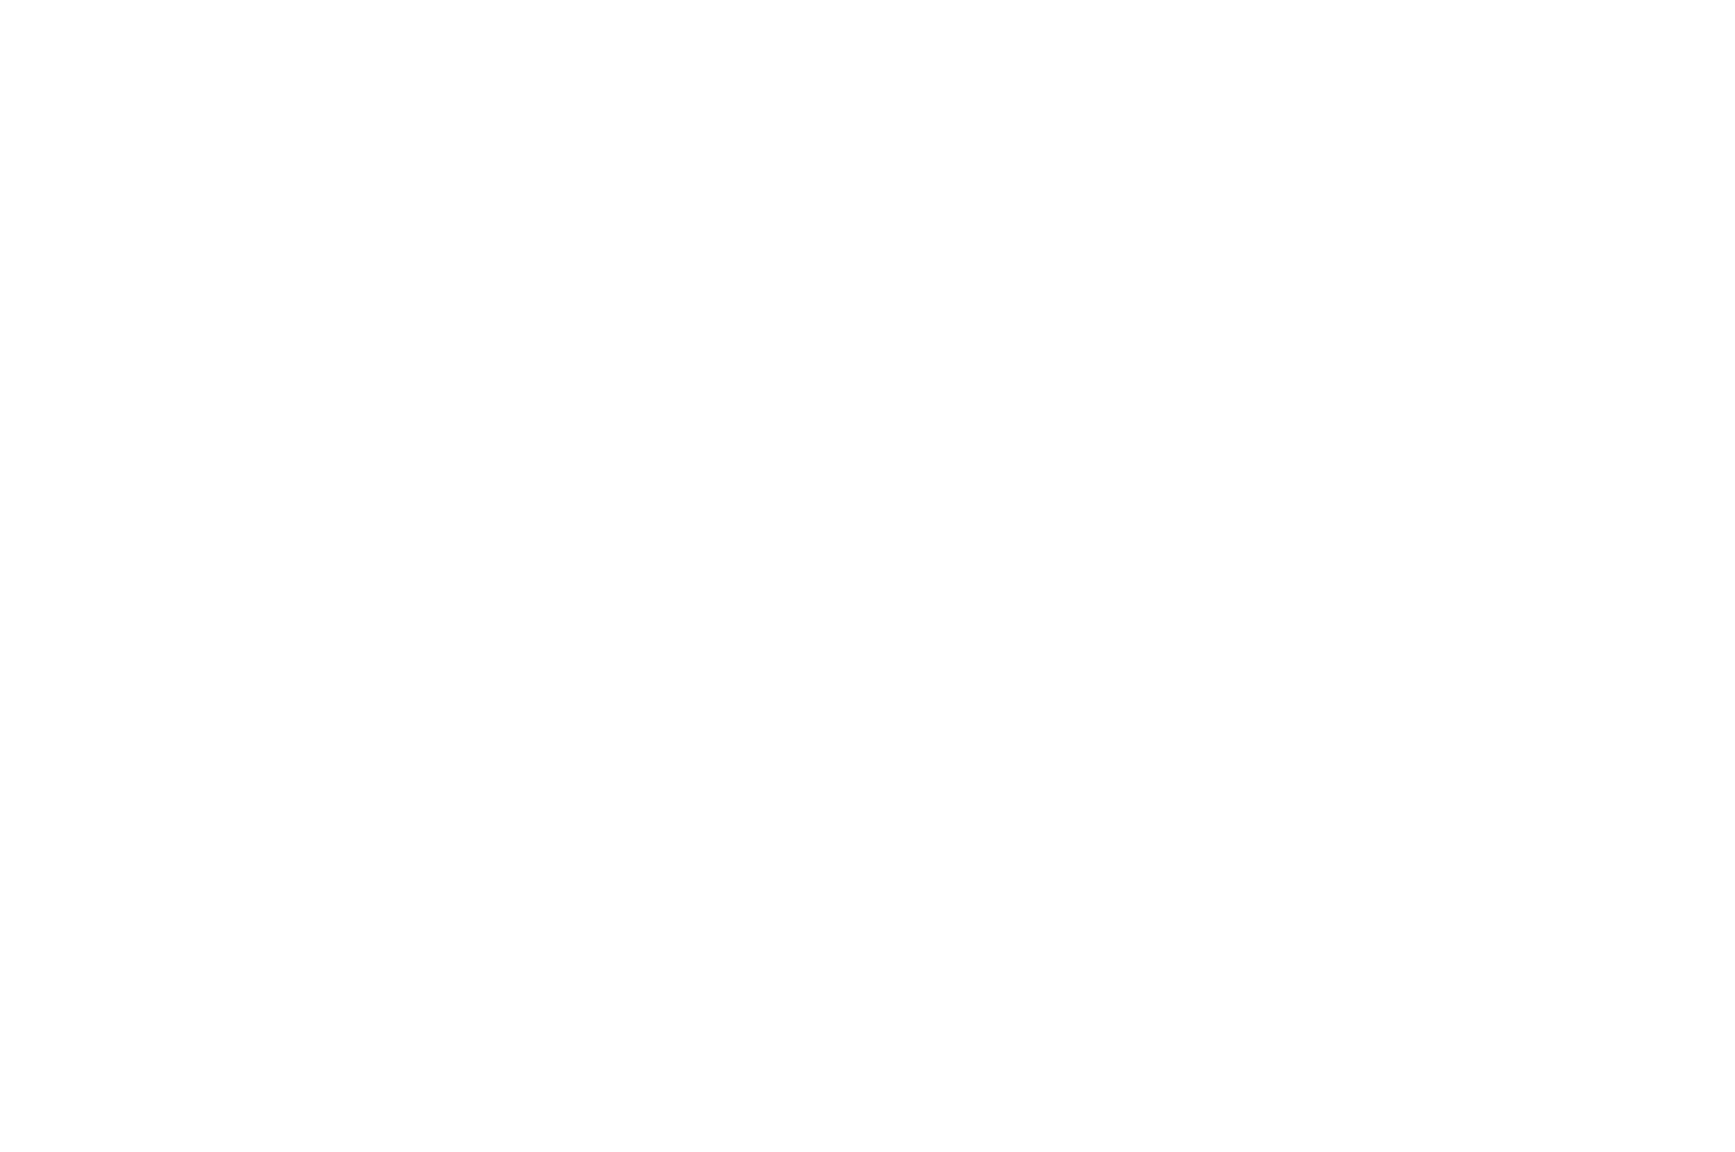 Melbourne Lift-Off Film Festival - Official Selection